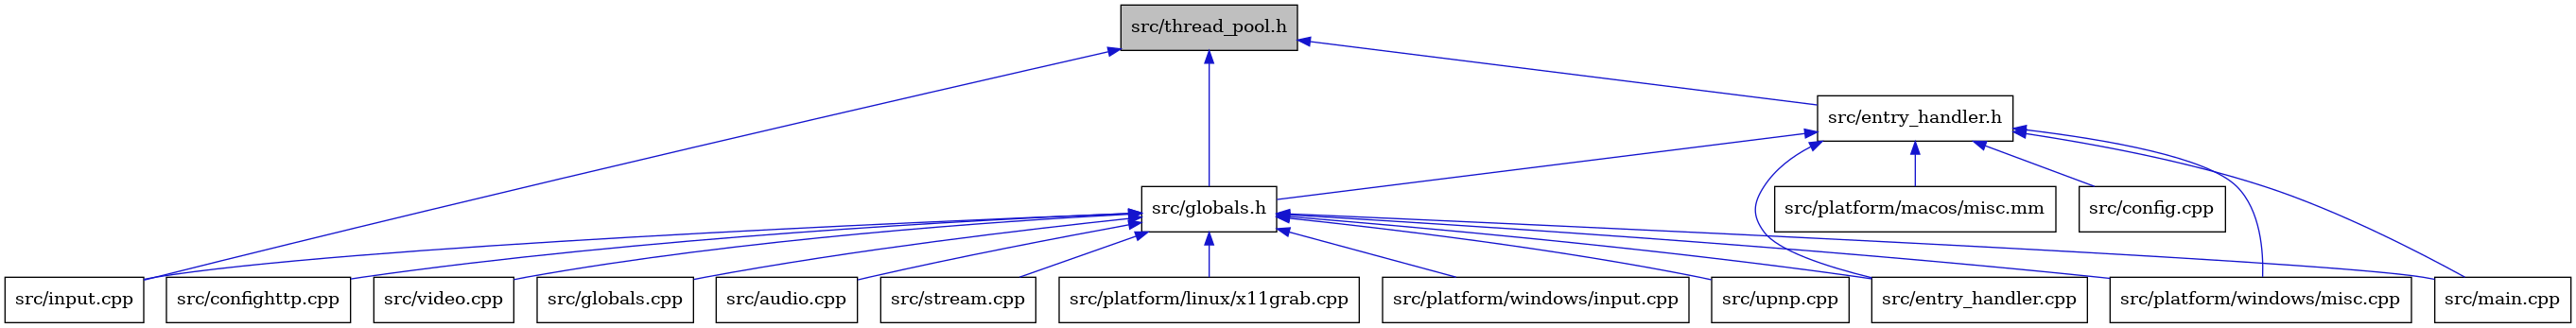 digraph {
    graph [bgcolor="#00000000"]
    node [shape=rectangle style=filled fillcolor="#FFFFFF" font=Helvetica padding=2]
    edge [color="#1414CE"]
    "9" [label="src/main.cpp" tooltip="src/main.cpp"]
    "12" [label="src/platform/windows/input.cpp" tooltip="src/platform/windows/input.cpp"]
    "10" [label="src/input.cpp" tooltip="src/input.cpp"]
    "4" [label="src/entry_handler.cpp" tooltip="src/entry_handler.cpp"]
    "17" [label="src/platform/macos/misc.mm" tooltip="src/platform/macos/misc.mm"]
    "5" [label="src/globals.h" tooltip="src/globals.h"]
    "3" [label="src/config.cpp" tooltip="src/config.cpp"]
    "1" [label="src/thread_pool.h" tooltip="src/thread_pool.h" fillcolor="#BFBFBF"]
    "15" [label="src/upnp.cpp" tooltip="src/upnp.cpp"]
    "13" [label="src/platform/windows/misc.cpp" tooltip="src/platform/windows/misc.cpp"]
    "7" [label="src/confighttp.cpp" tooltip="src/confighttp.cpp"]
    "16" [label="src/video.cpp" tooltip="src/video.cpp"]
    "8" [label="src/globals.cpp" tooltip="src/globals.cpp"]
    "2" [label="src/entry_handler.h" tooltip="src/entry_handler.h"]
    "6" [label="src/audio.cpp" tooltip="src/audio.cpp"]
    "14" [label="src/stream.cpp" tooltip="src/stream.cpp"]
    "11" [label="src/platform/linux/x11grab.cpp" tooltip="src/platform/linux/x11grab.cpp"]
    "5" -> "6" [dir=back tooltip="include"]
    "5" -> "7" [dir=back tooltip="include"]
    "5" -> "4" [dir=back tooltip="include"]
    "5" -> "8" [dir=back tooltip="include"]
    "5" -> "9" [dir=back tooltip="include"]
    "5" -> "10" [dir=back tooltip="include"]
    "5" -> "11" [dir=back tooltip="include"]
    "5" -> "12" [dir=back tooltip="include"]
    "5" -> "13" [dir=back tooltip="include"]
    "5" -> "14" [dir=back tooltip="include"]
    "5" -> "15" [dir=back tooltip="include"]
    "5" -> "16" [dir=back tooltip="include"]
    "1" -> "2" [dir=back tooltip="include"]
    "1" -> "5" [dir=back tooltip="include"]
    "1" -> "10" [dir=back tooltip="include"]
    "2" -> "3" [dir=back tooltip="include"]
    "2" -> "4" [dir=back tooltip="include"]
    "2" -> "5" [dir=back tooltip="include"]
    "2" -> "9" [dir=back tooltip="include"]
    "2" -> "17" [dir=back tooltip="include"]
    "2" -> "13" [dir=back tooltip="include"]
}